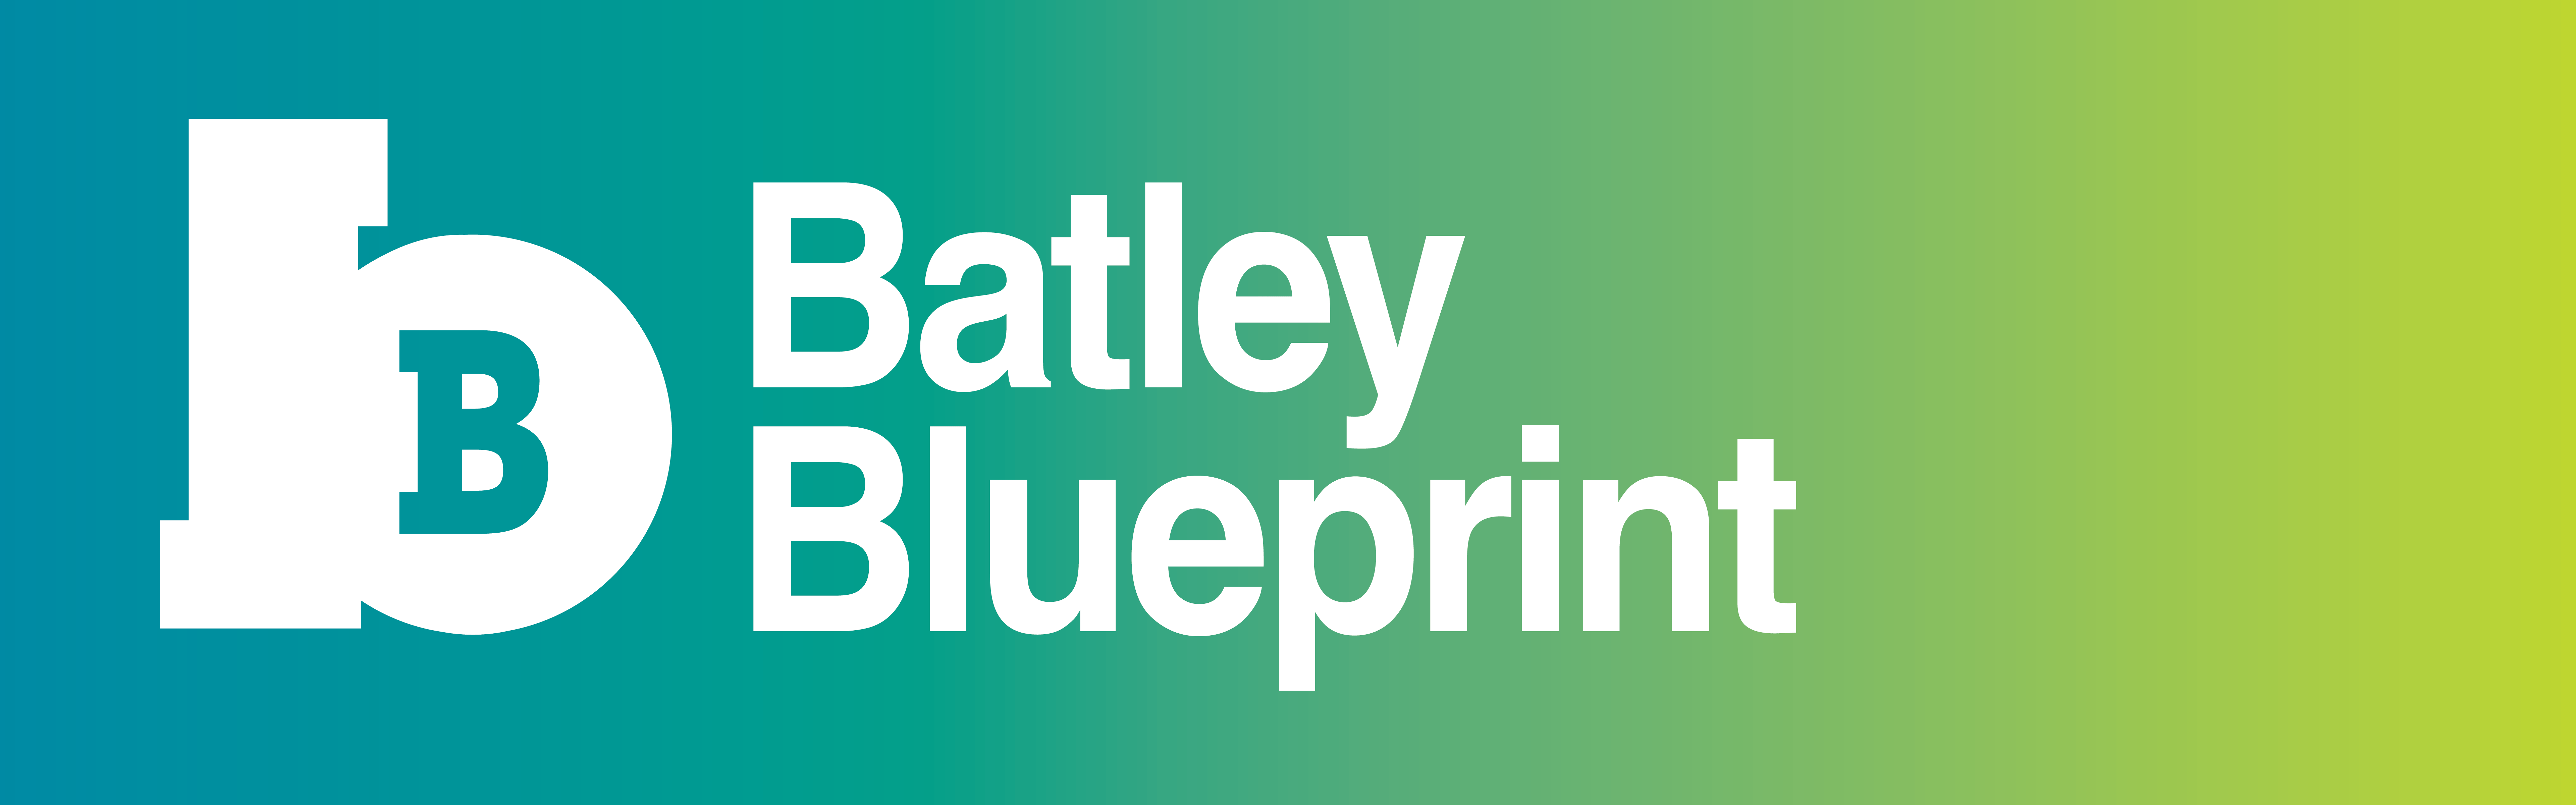 Batley Blueprint Banner